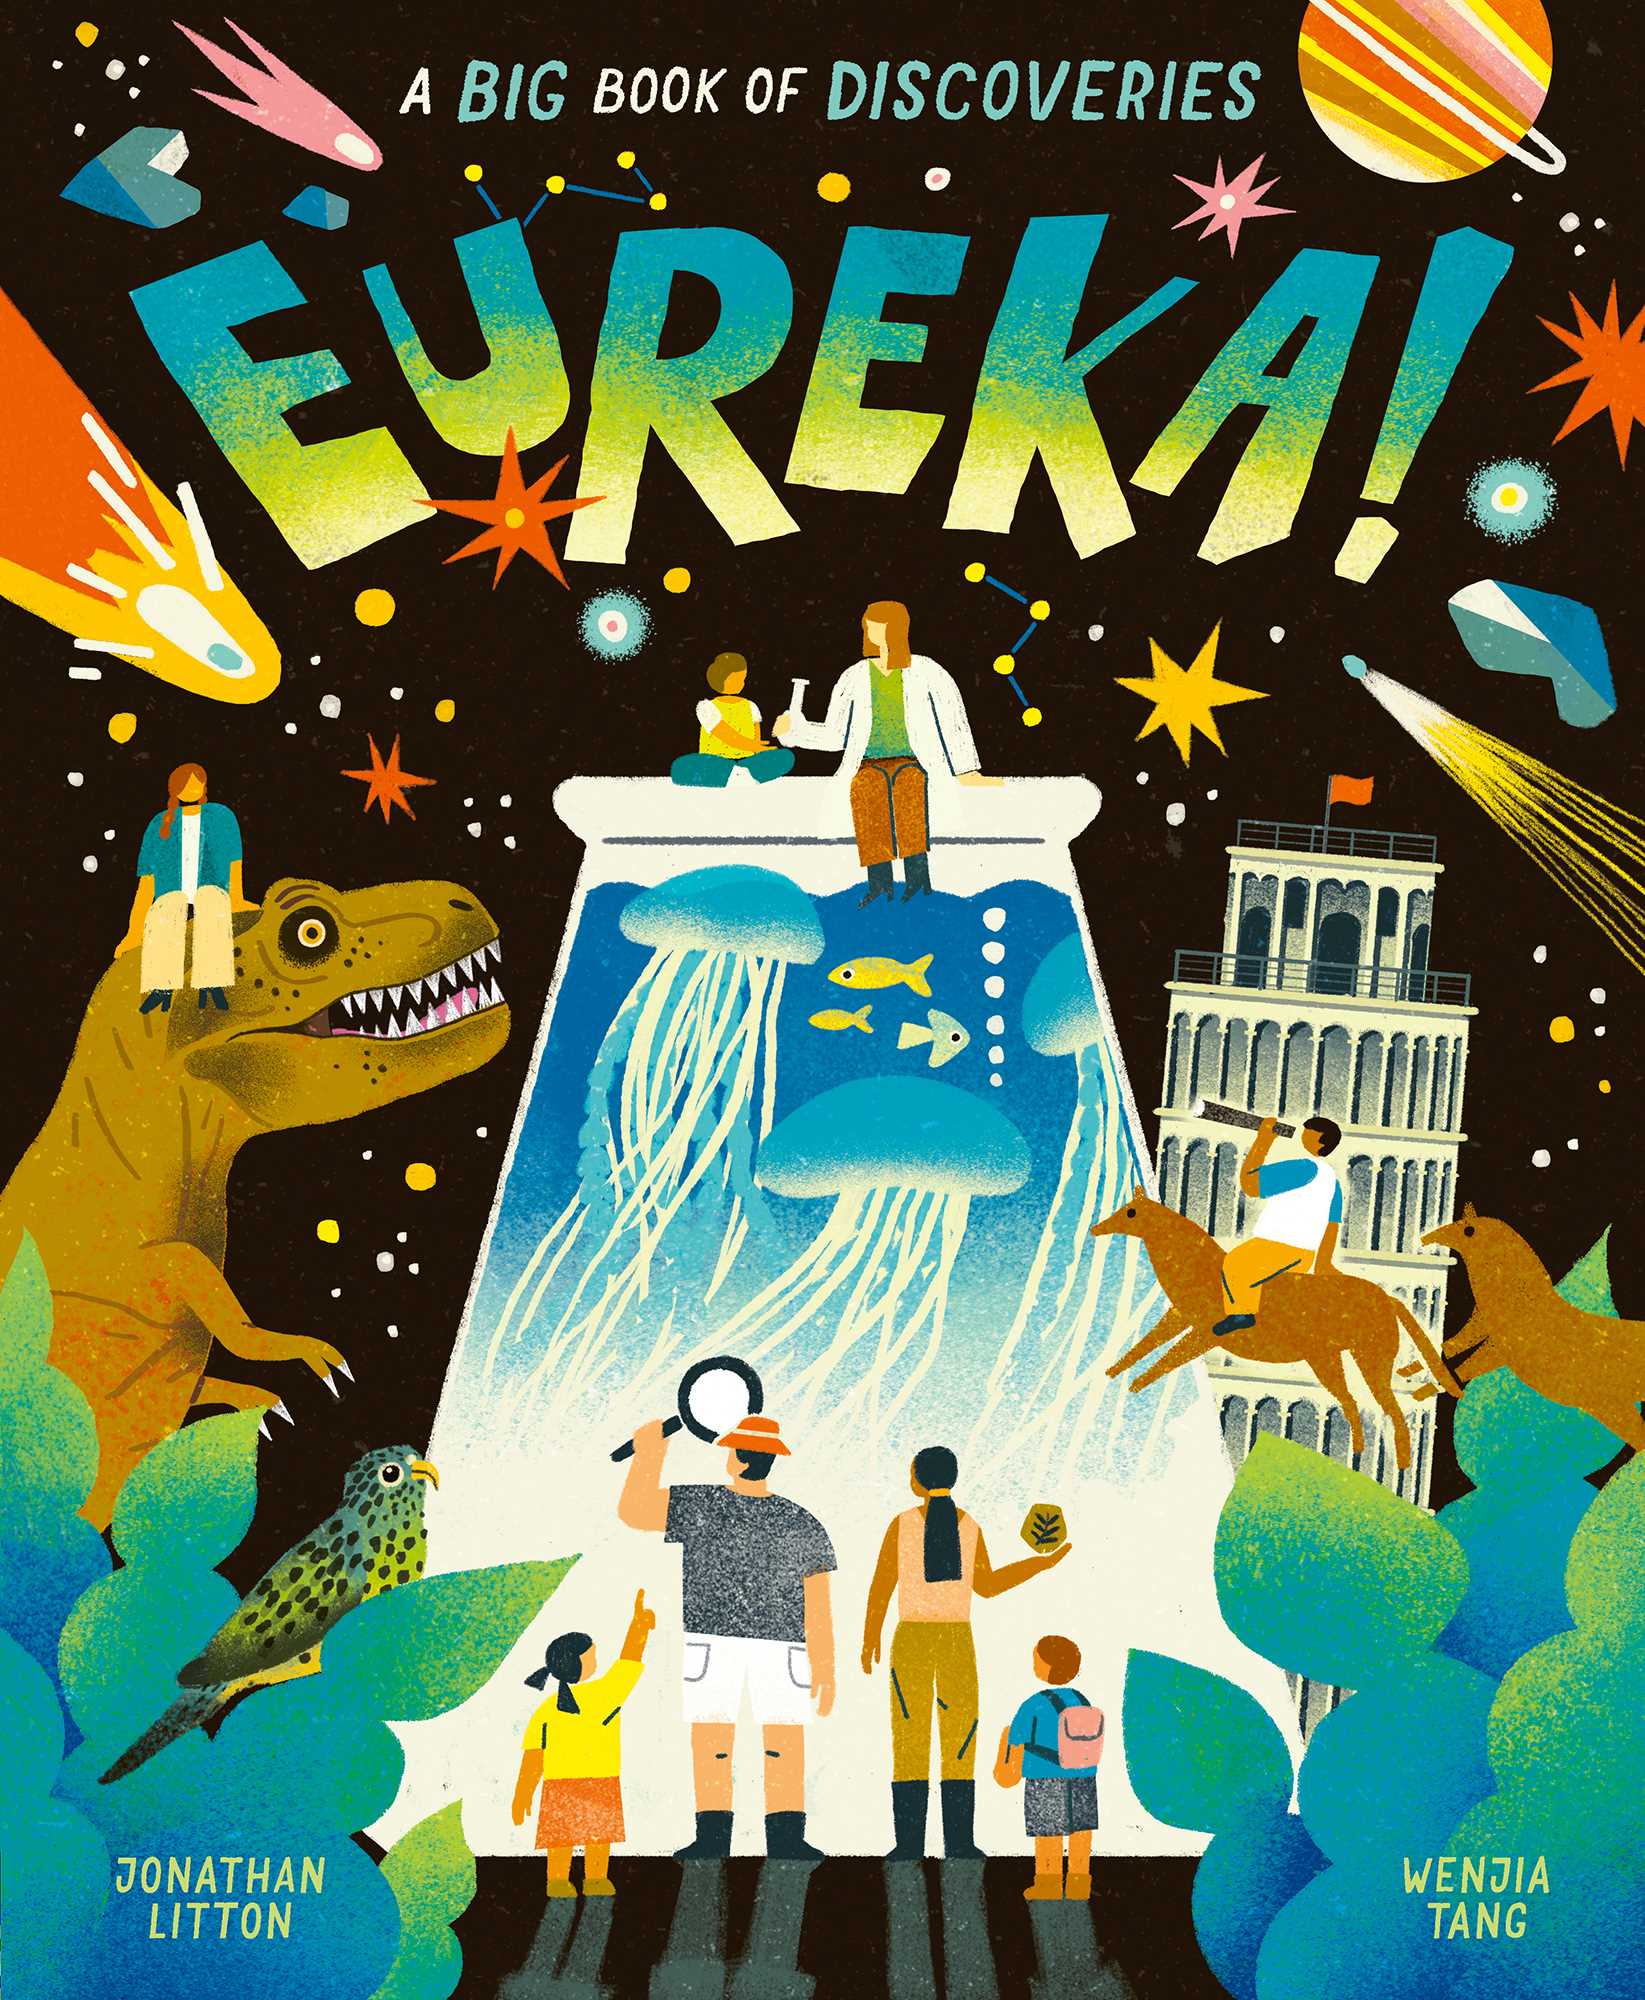 Eureka! A Big Book of Discoveries